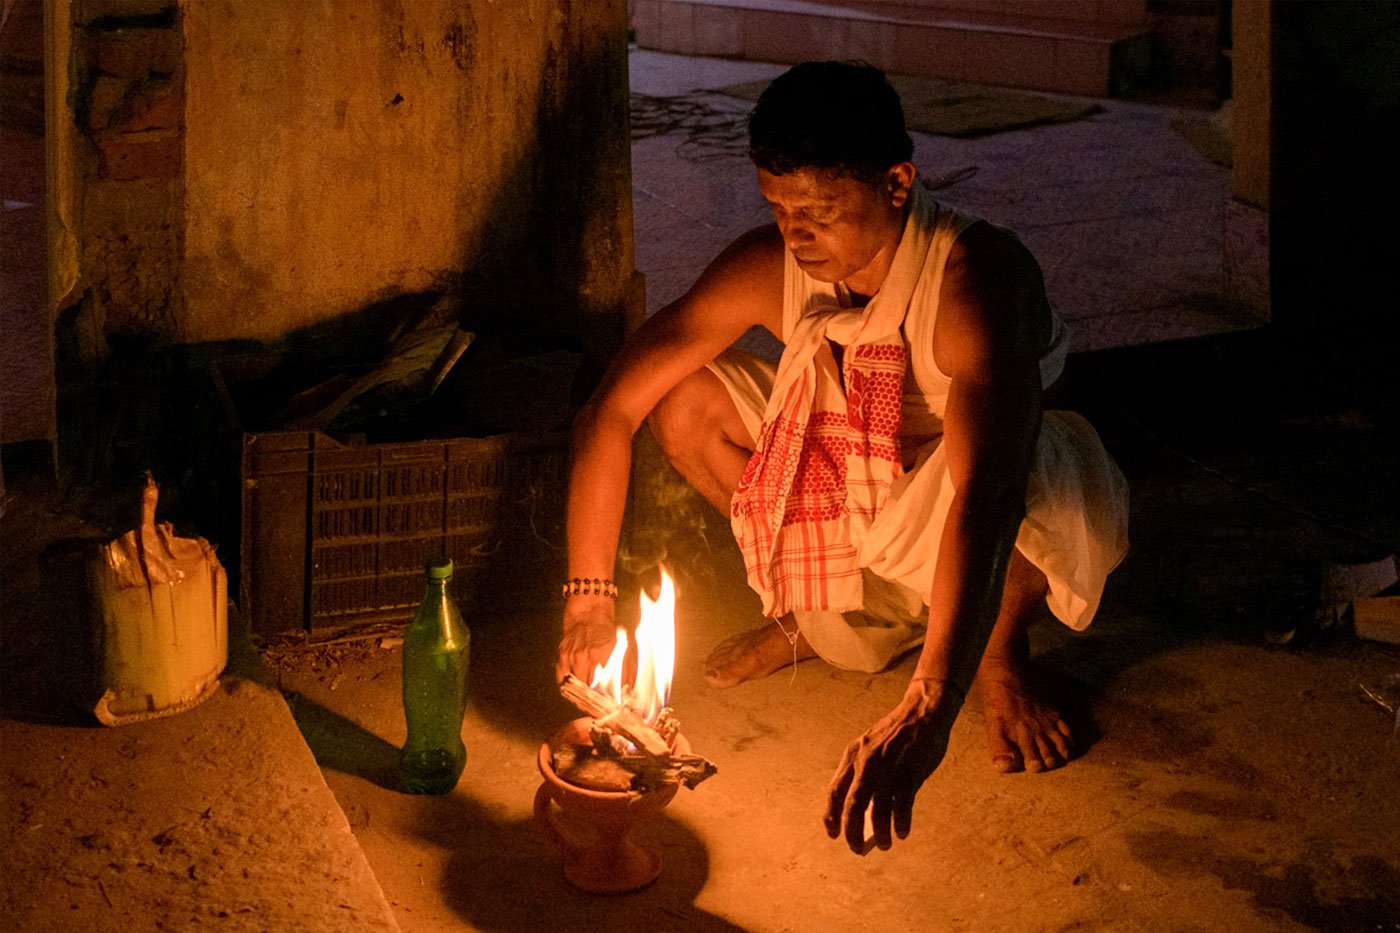 Dutta, after his performance as Boraho, lights a dhuna for prayer